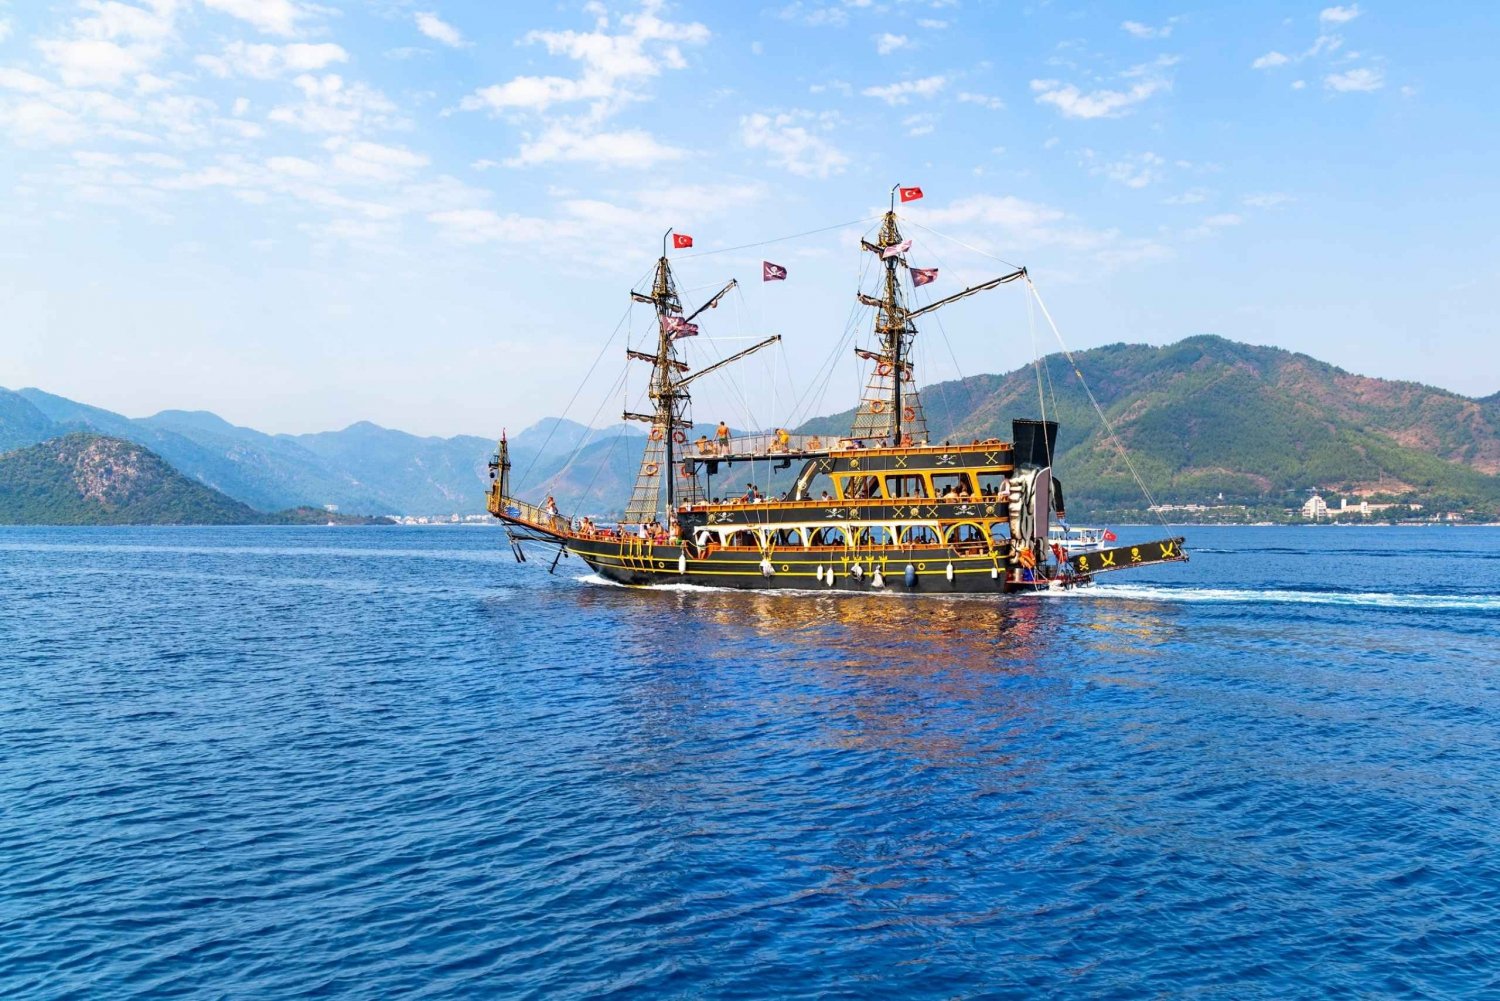 Bodrum: Crucero en barco pirata